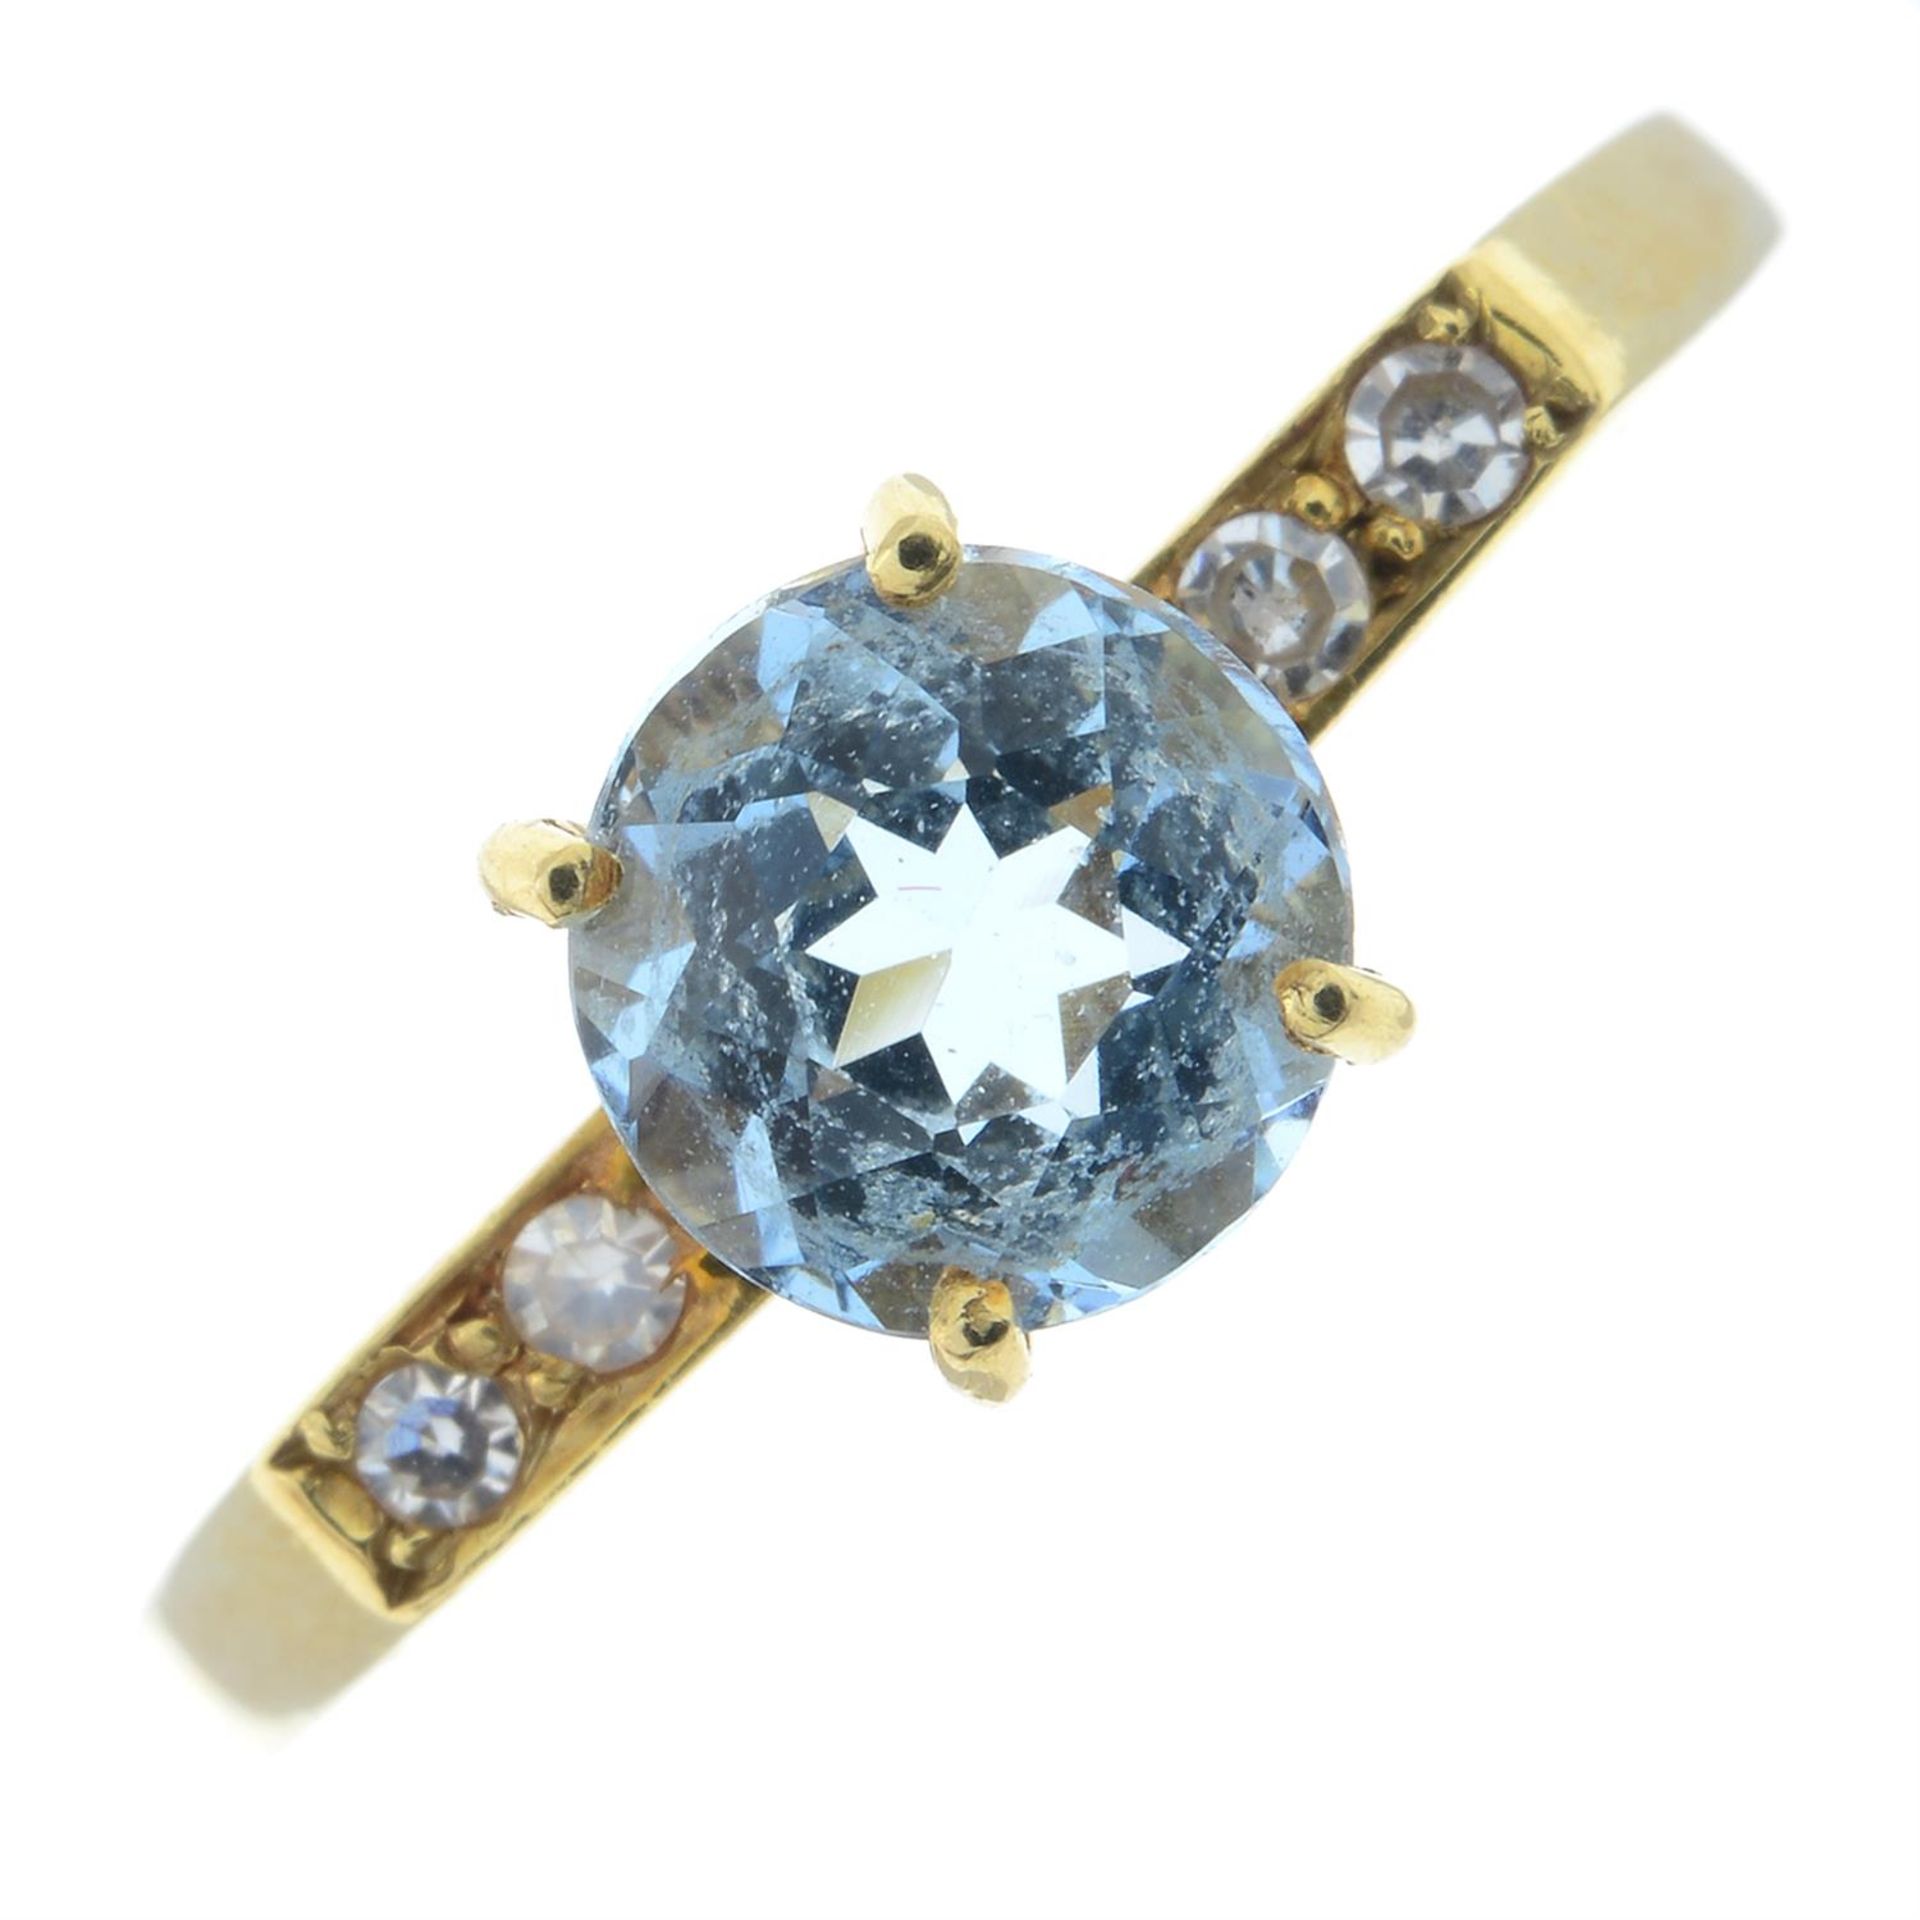 An aquamarine and single-cut diamond ring.